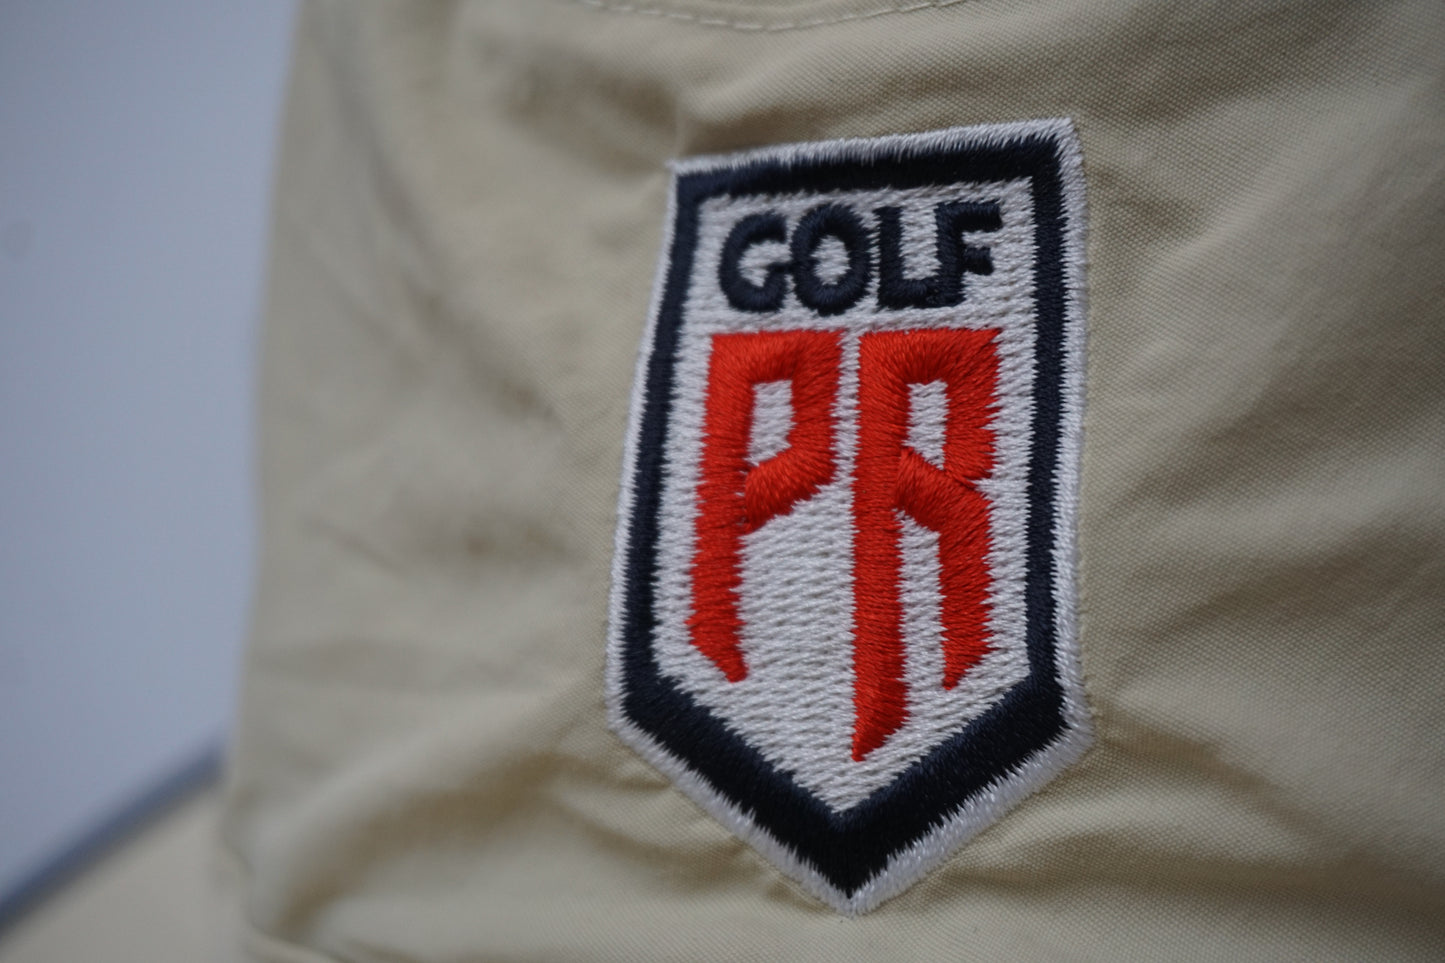 Golf PR Hat